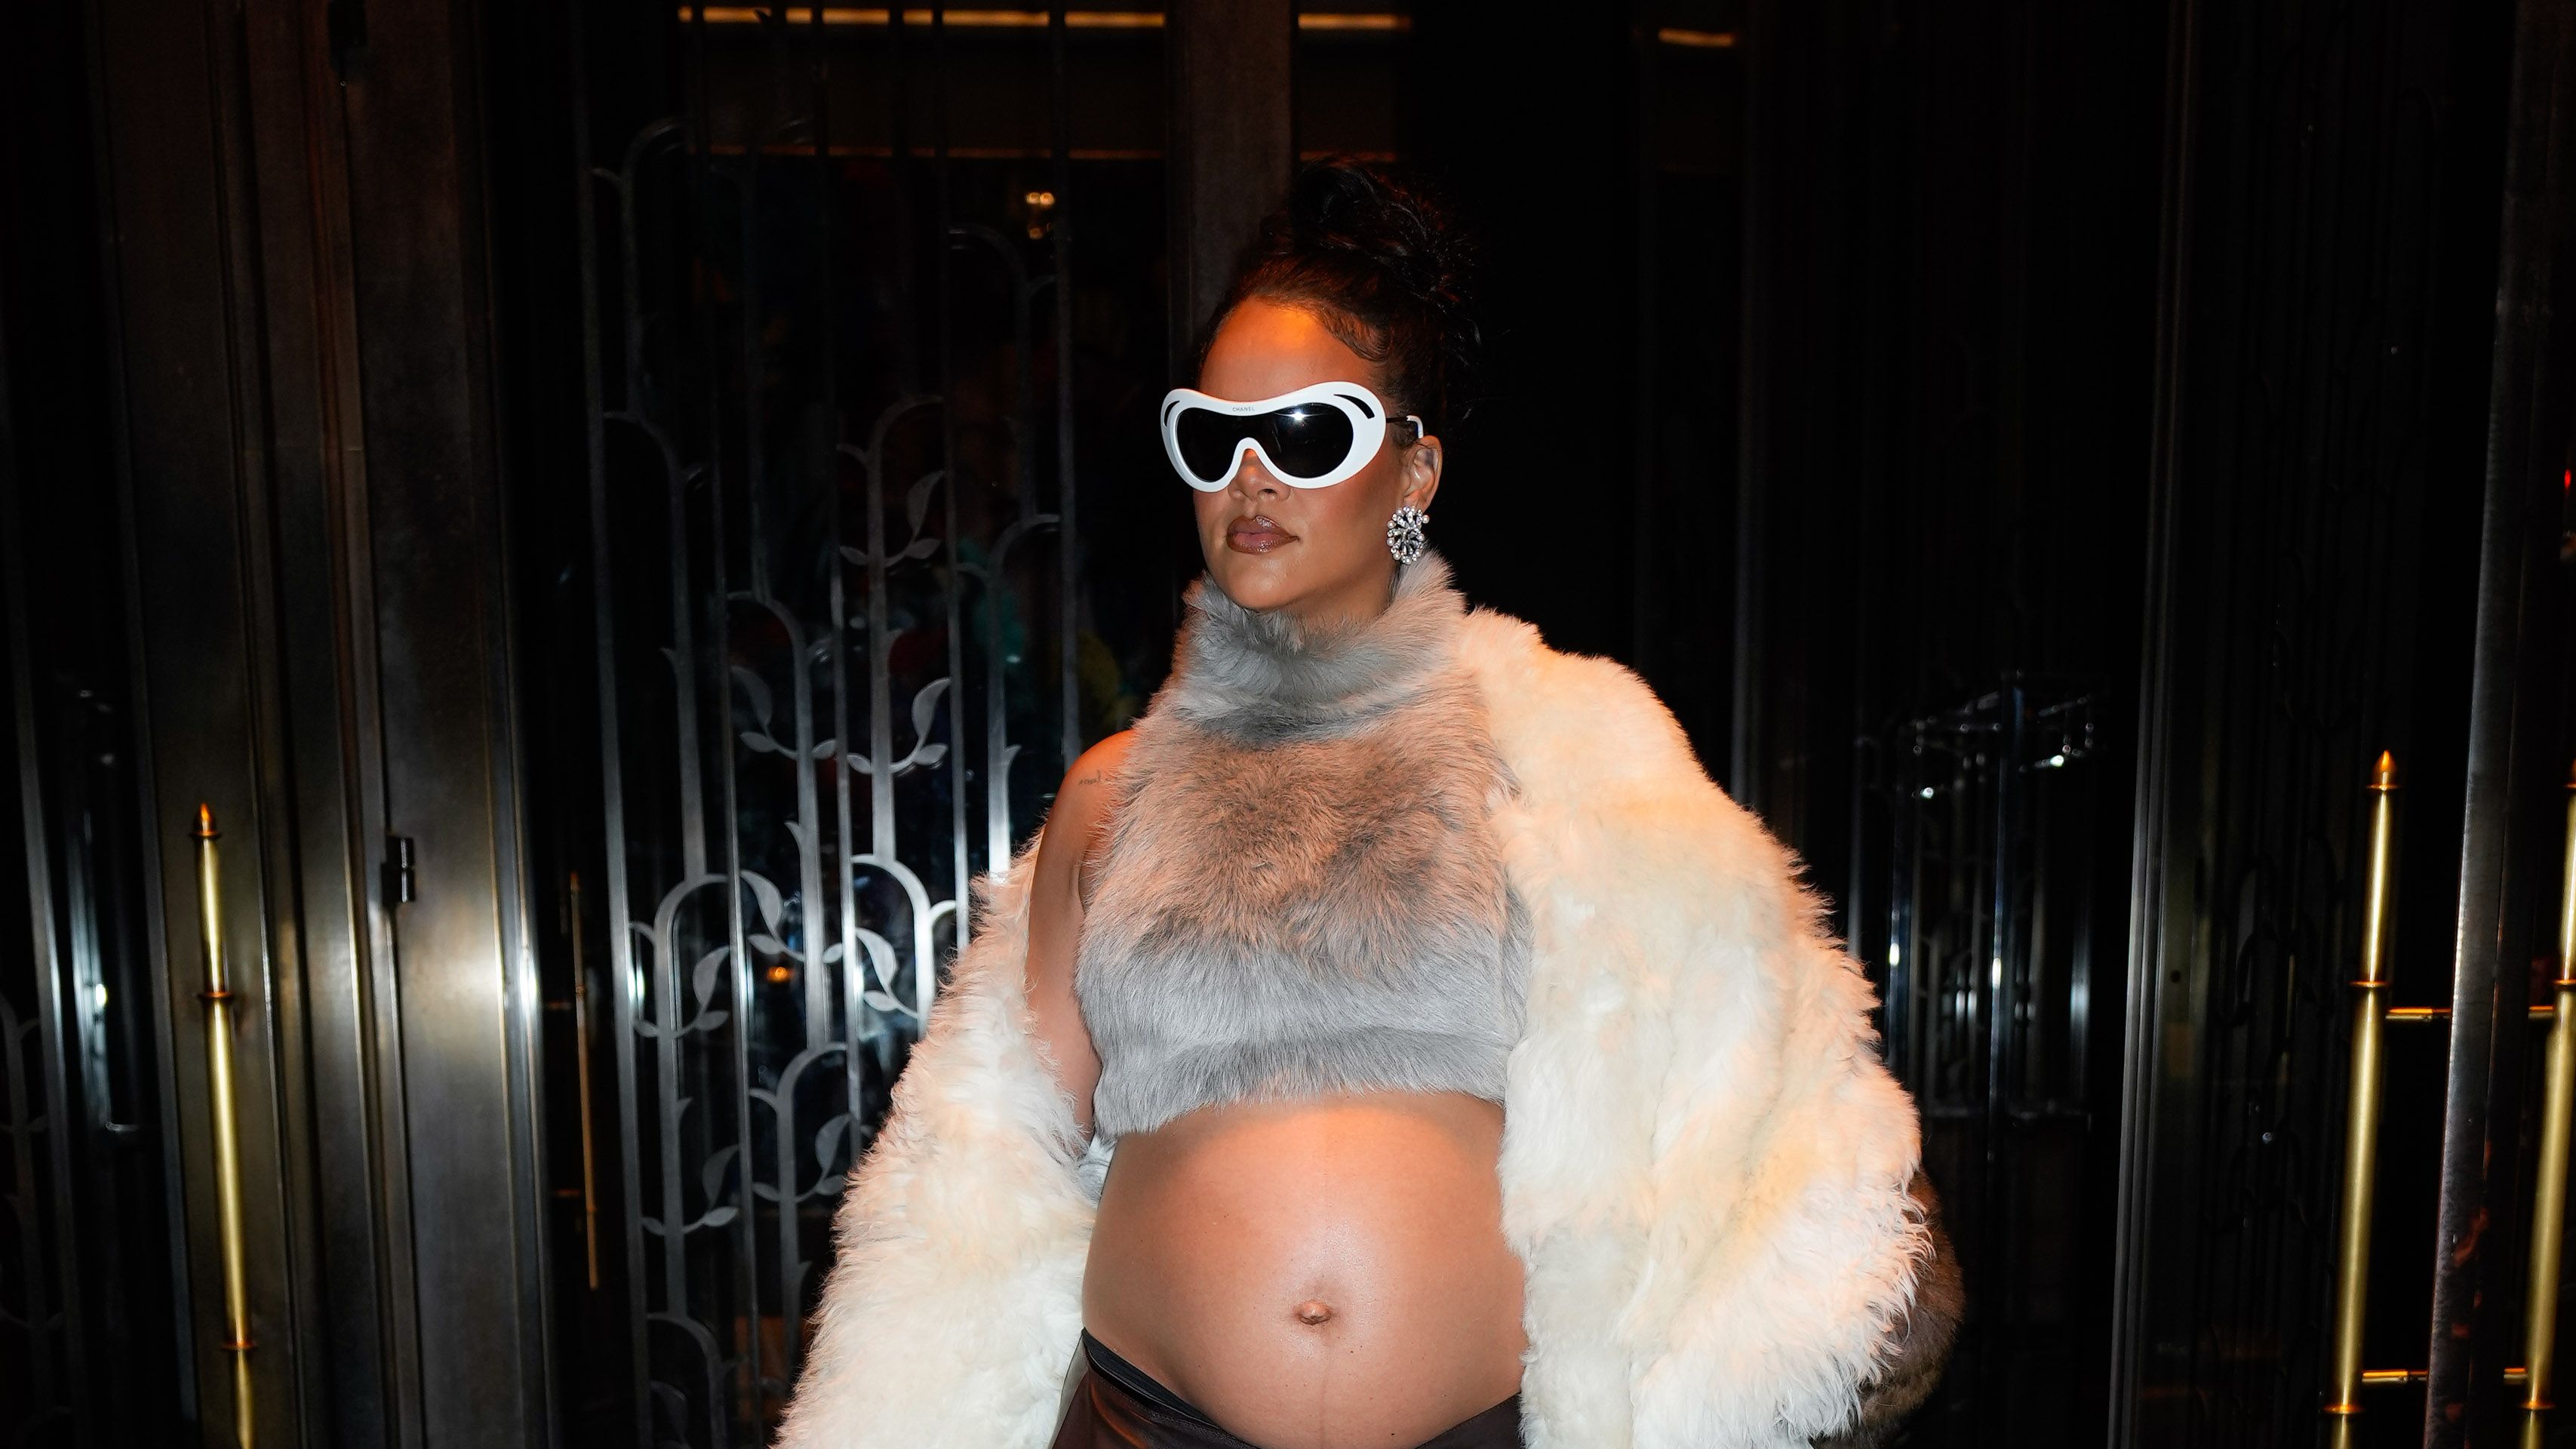 Rihanna Wears Bright Pink Two Piece In Stunning New Maternity Wear